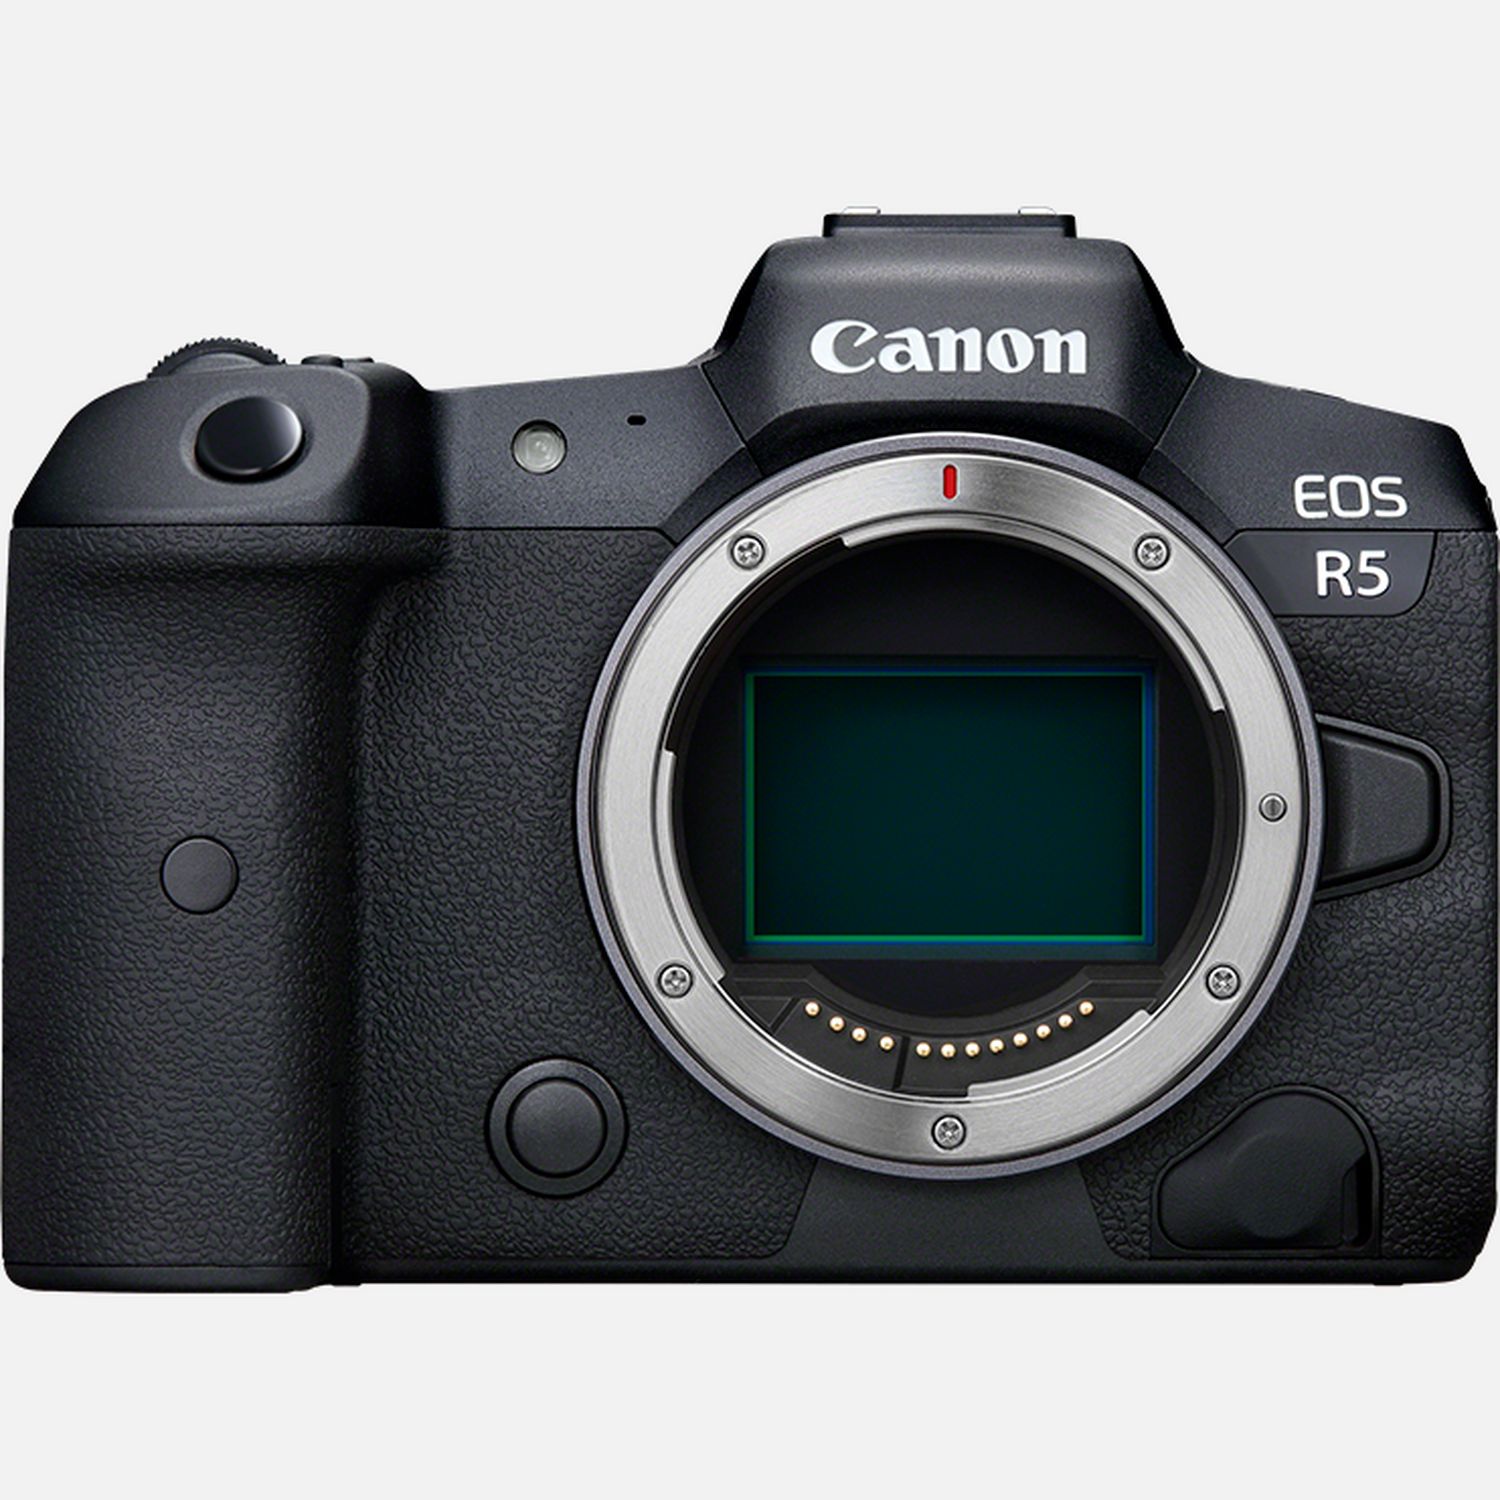 Inloggegevens Omgekeerd Justitie Canon EOS R5-systeemcamerabody in Wifi-camera's — Canon Nederland Store